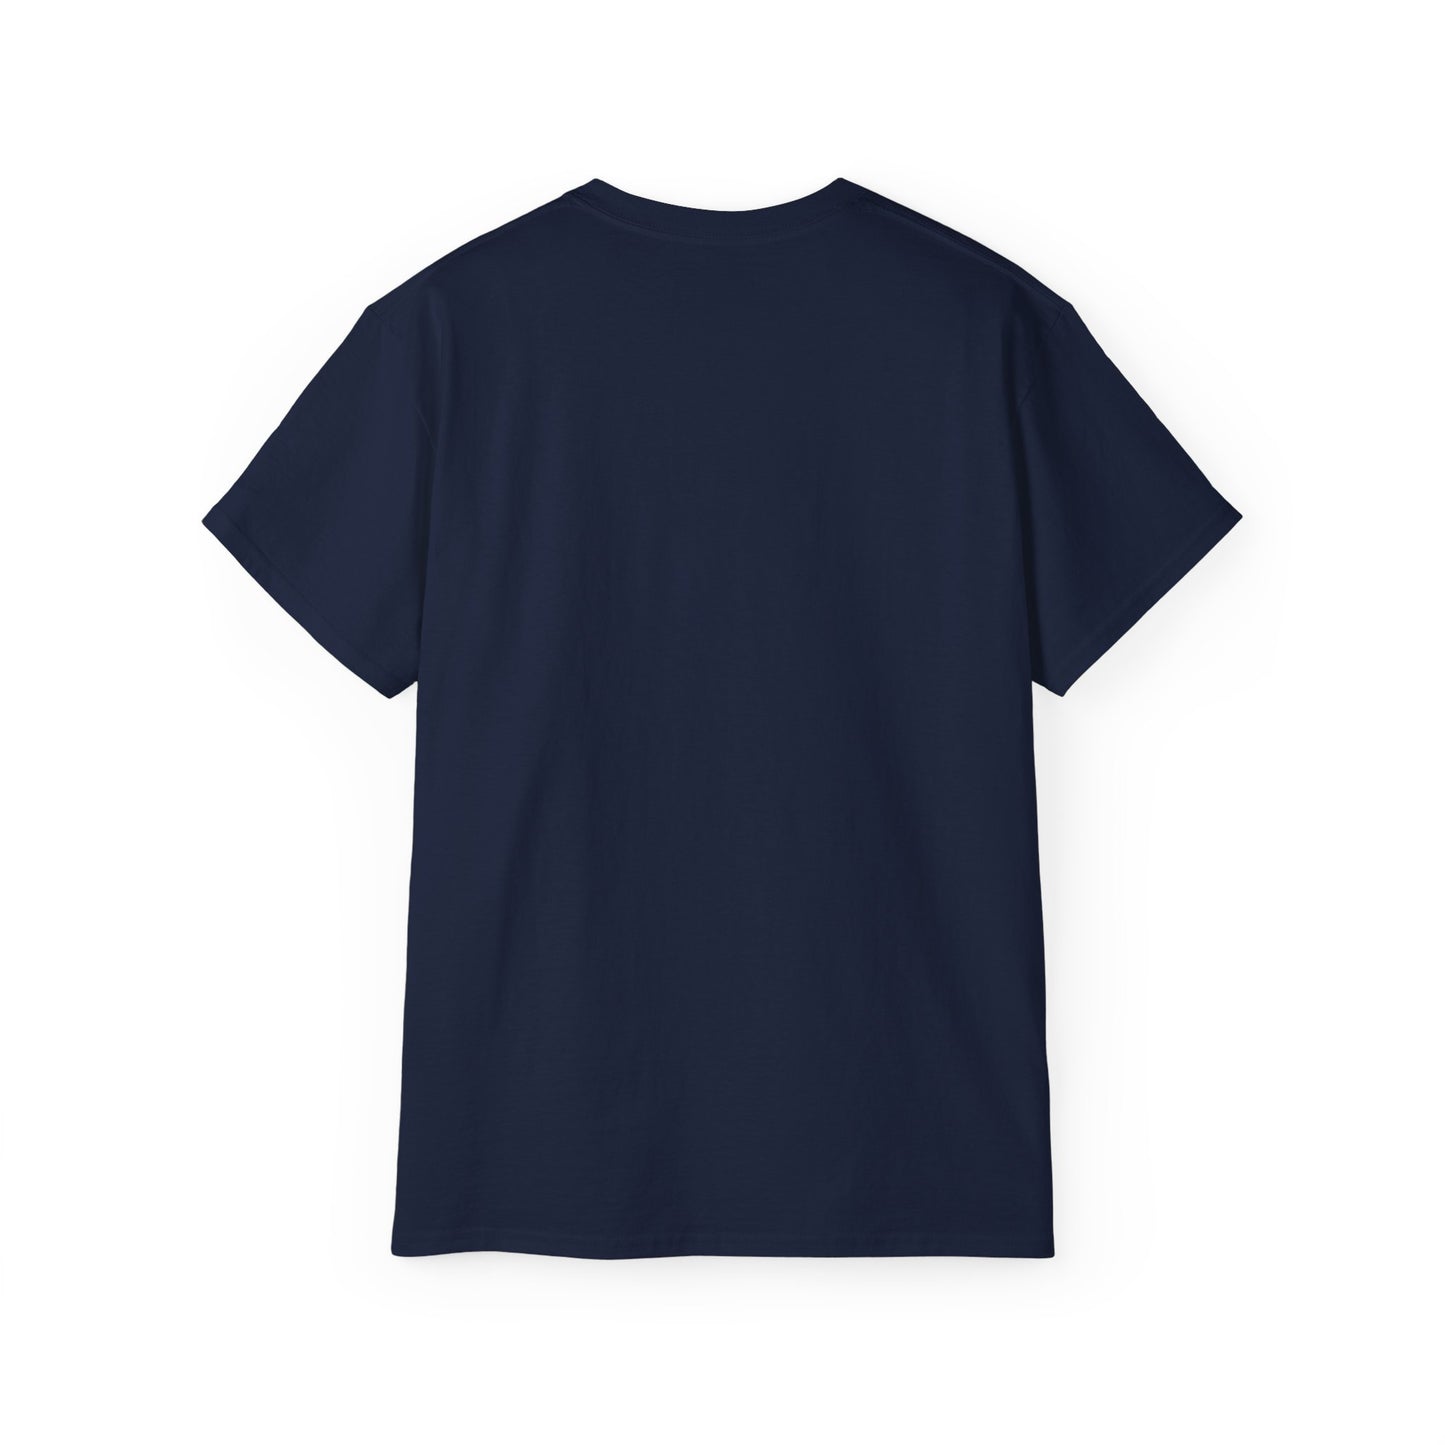 Camiseta unisex de ultra algodón de EE. UU.